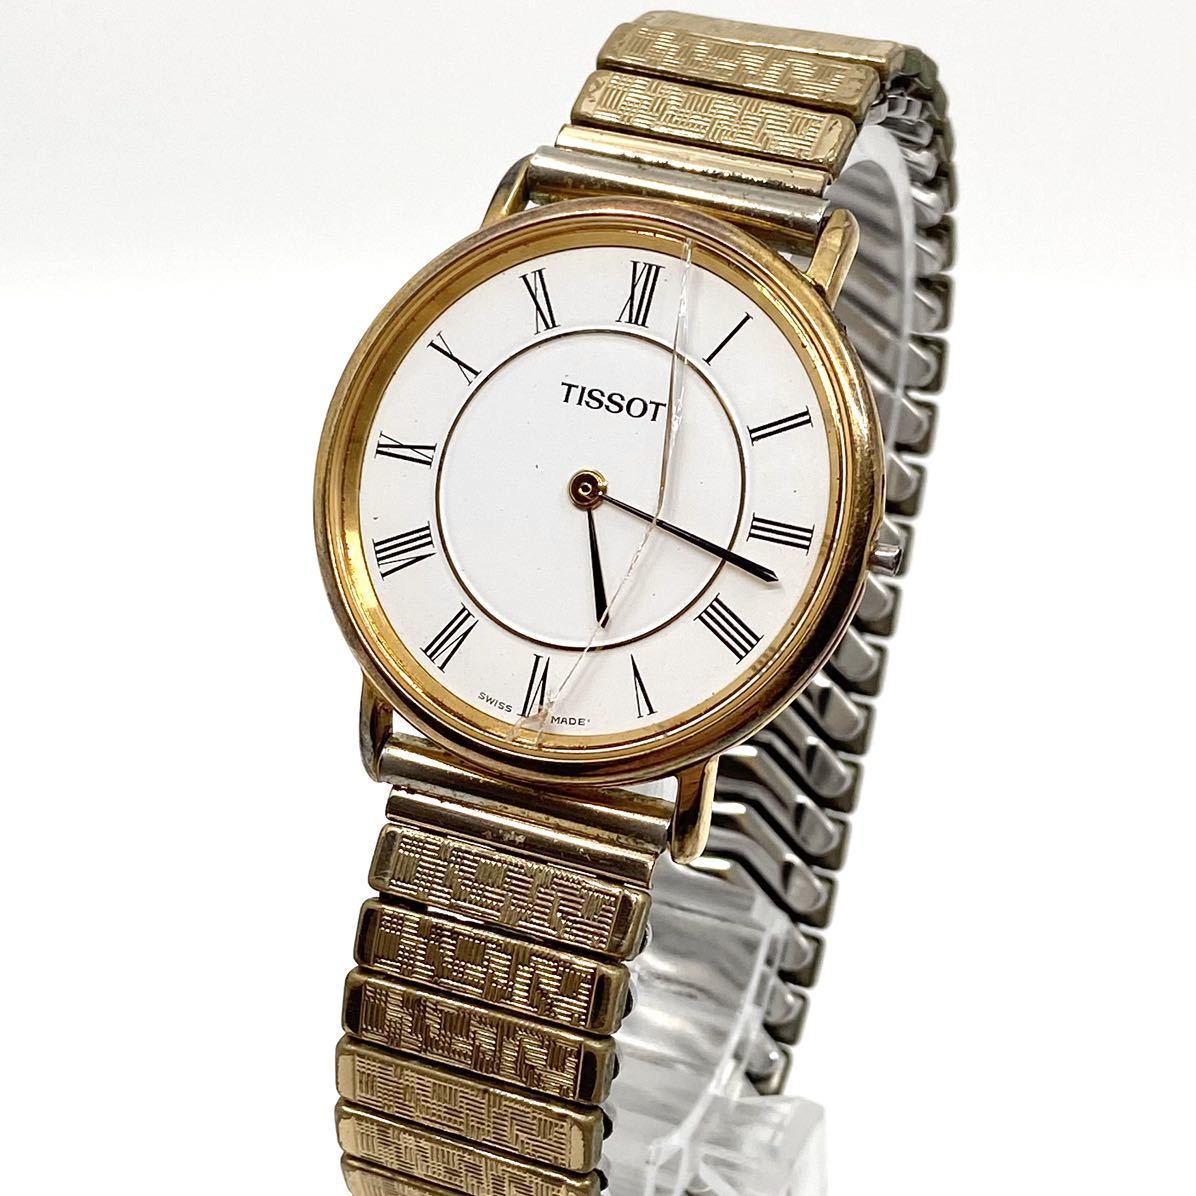 TISSOT 腕時計 蛇腹ベルト ローマンインデックス quartz クォーツ 2針 Swiss スイス製 ホワイト ゴールド 白 金 ティソ D46_画像1